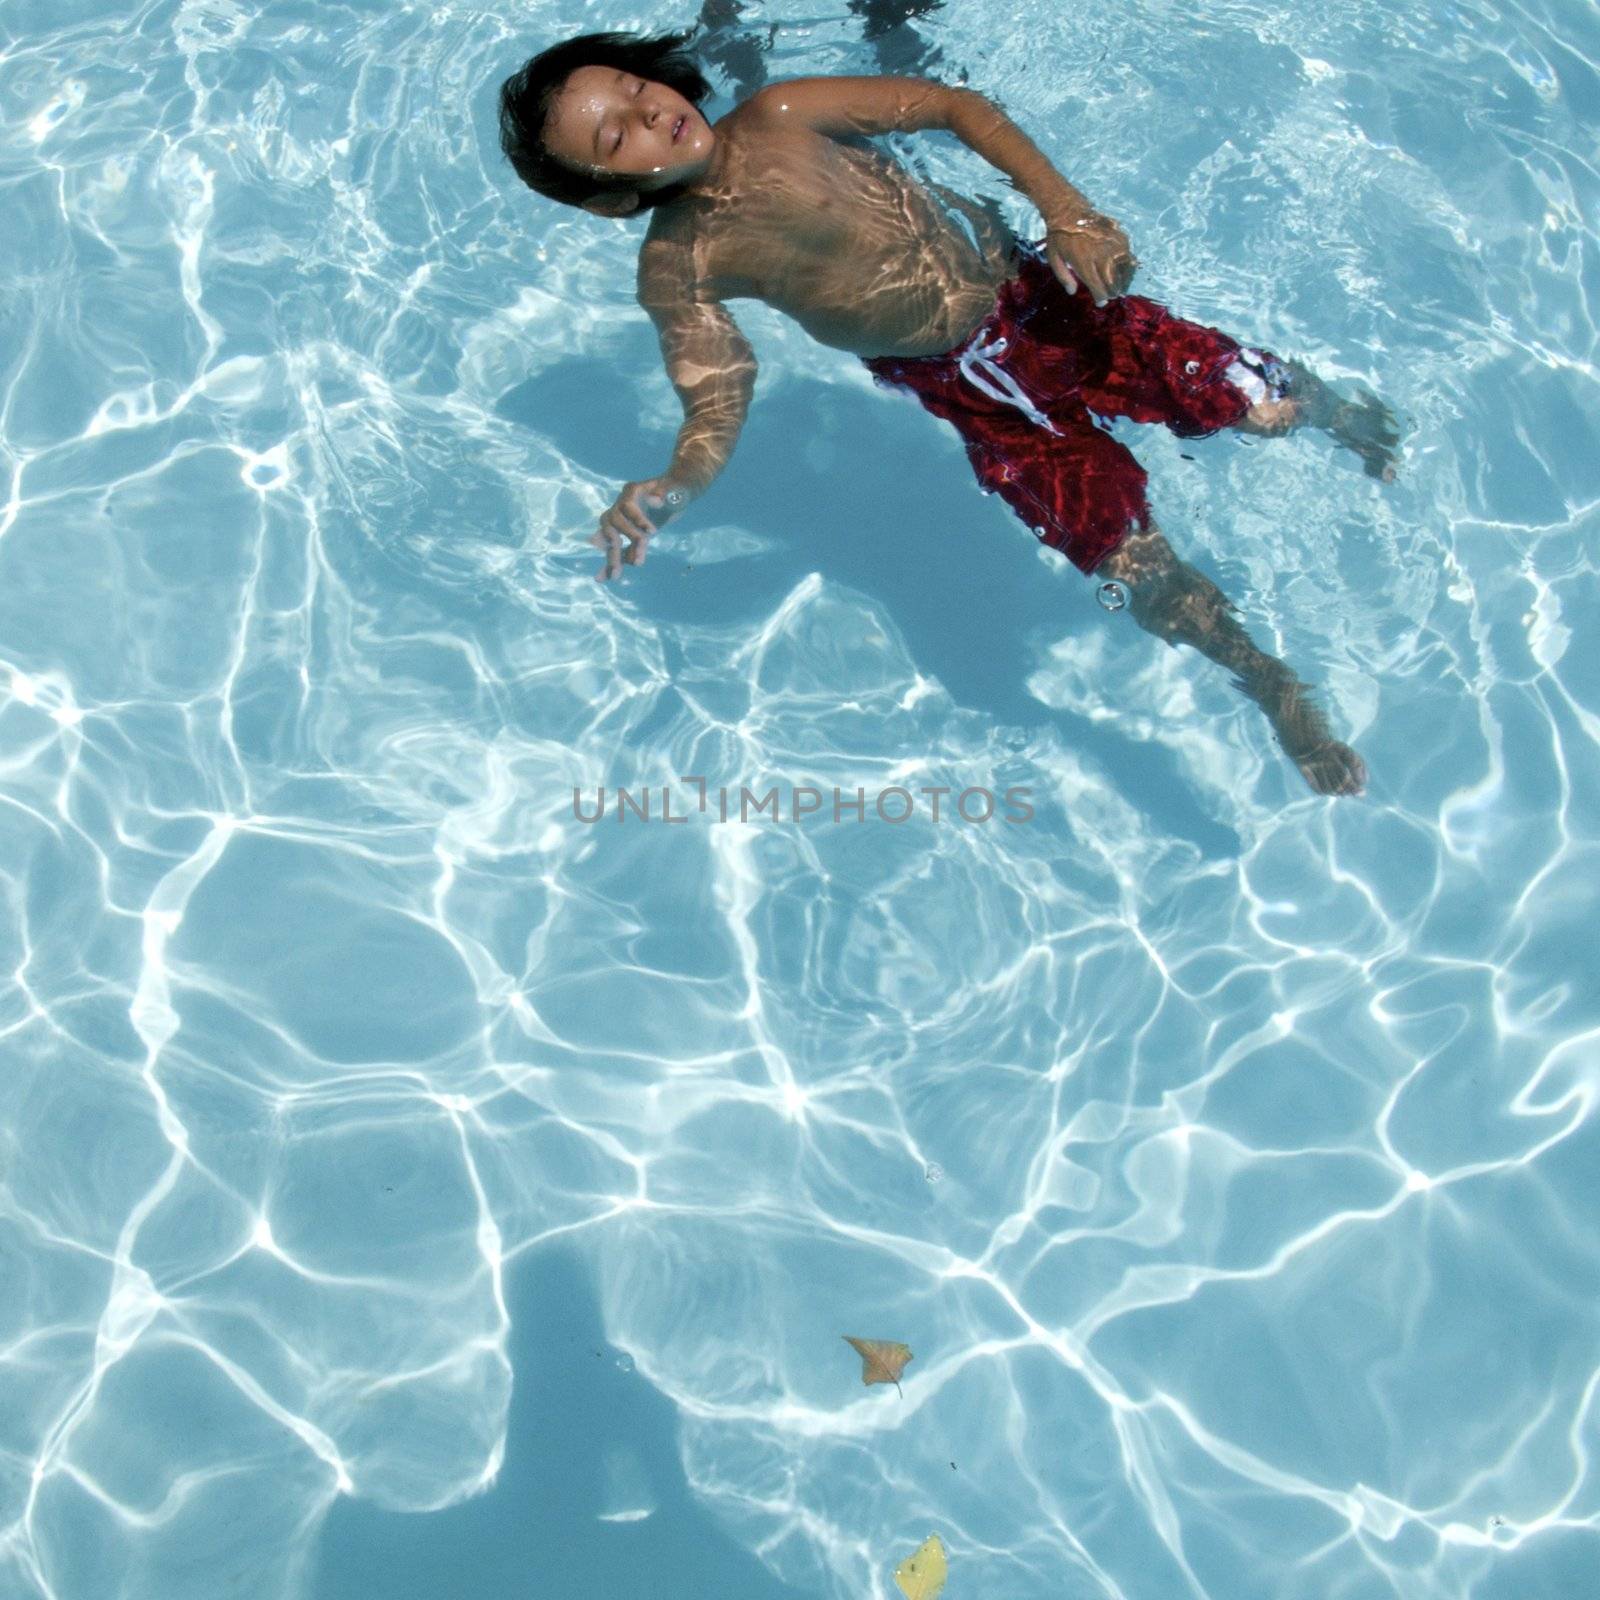 Little boy learning to swim by jedphoto